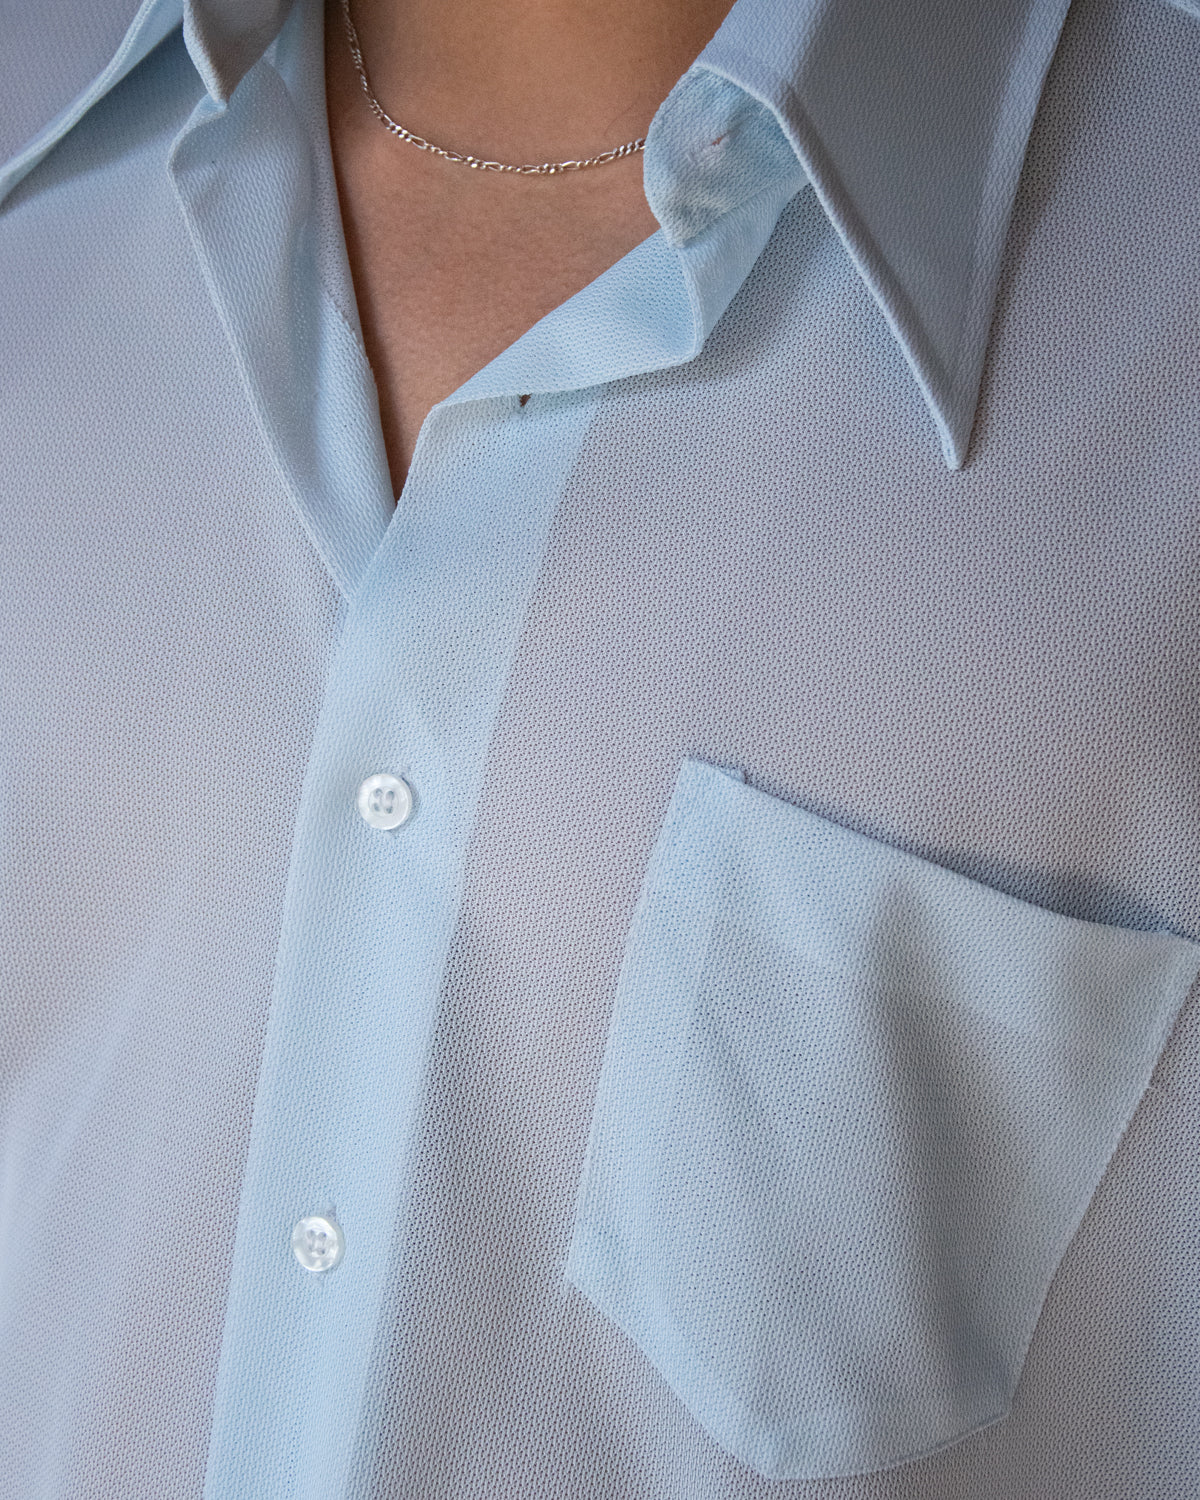 70s Semi Sheer Pale Blue Shirt